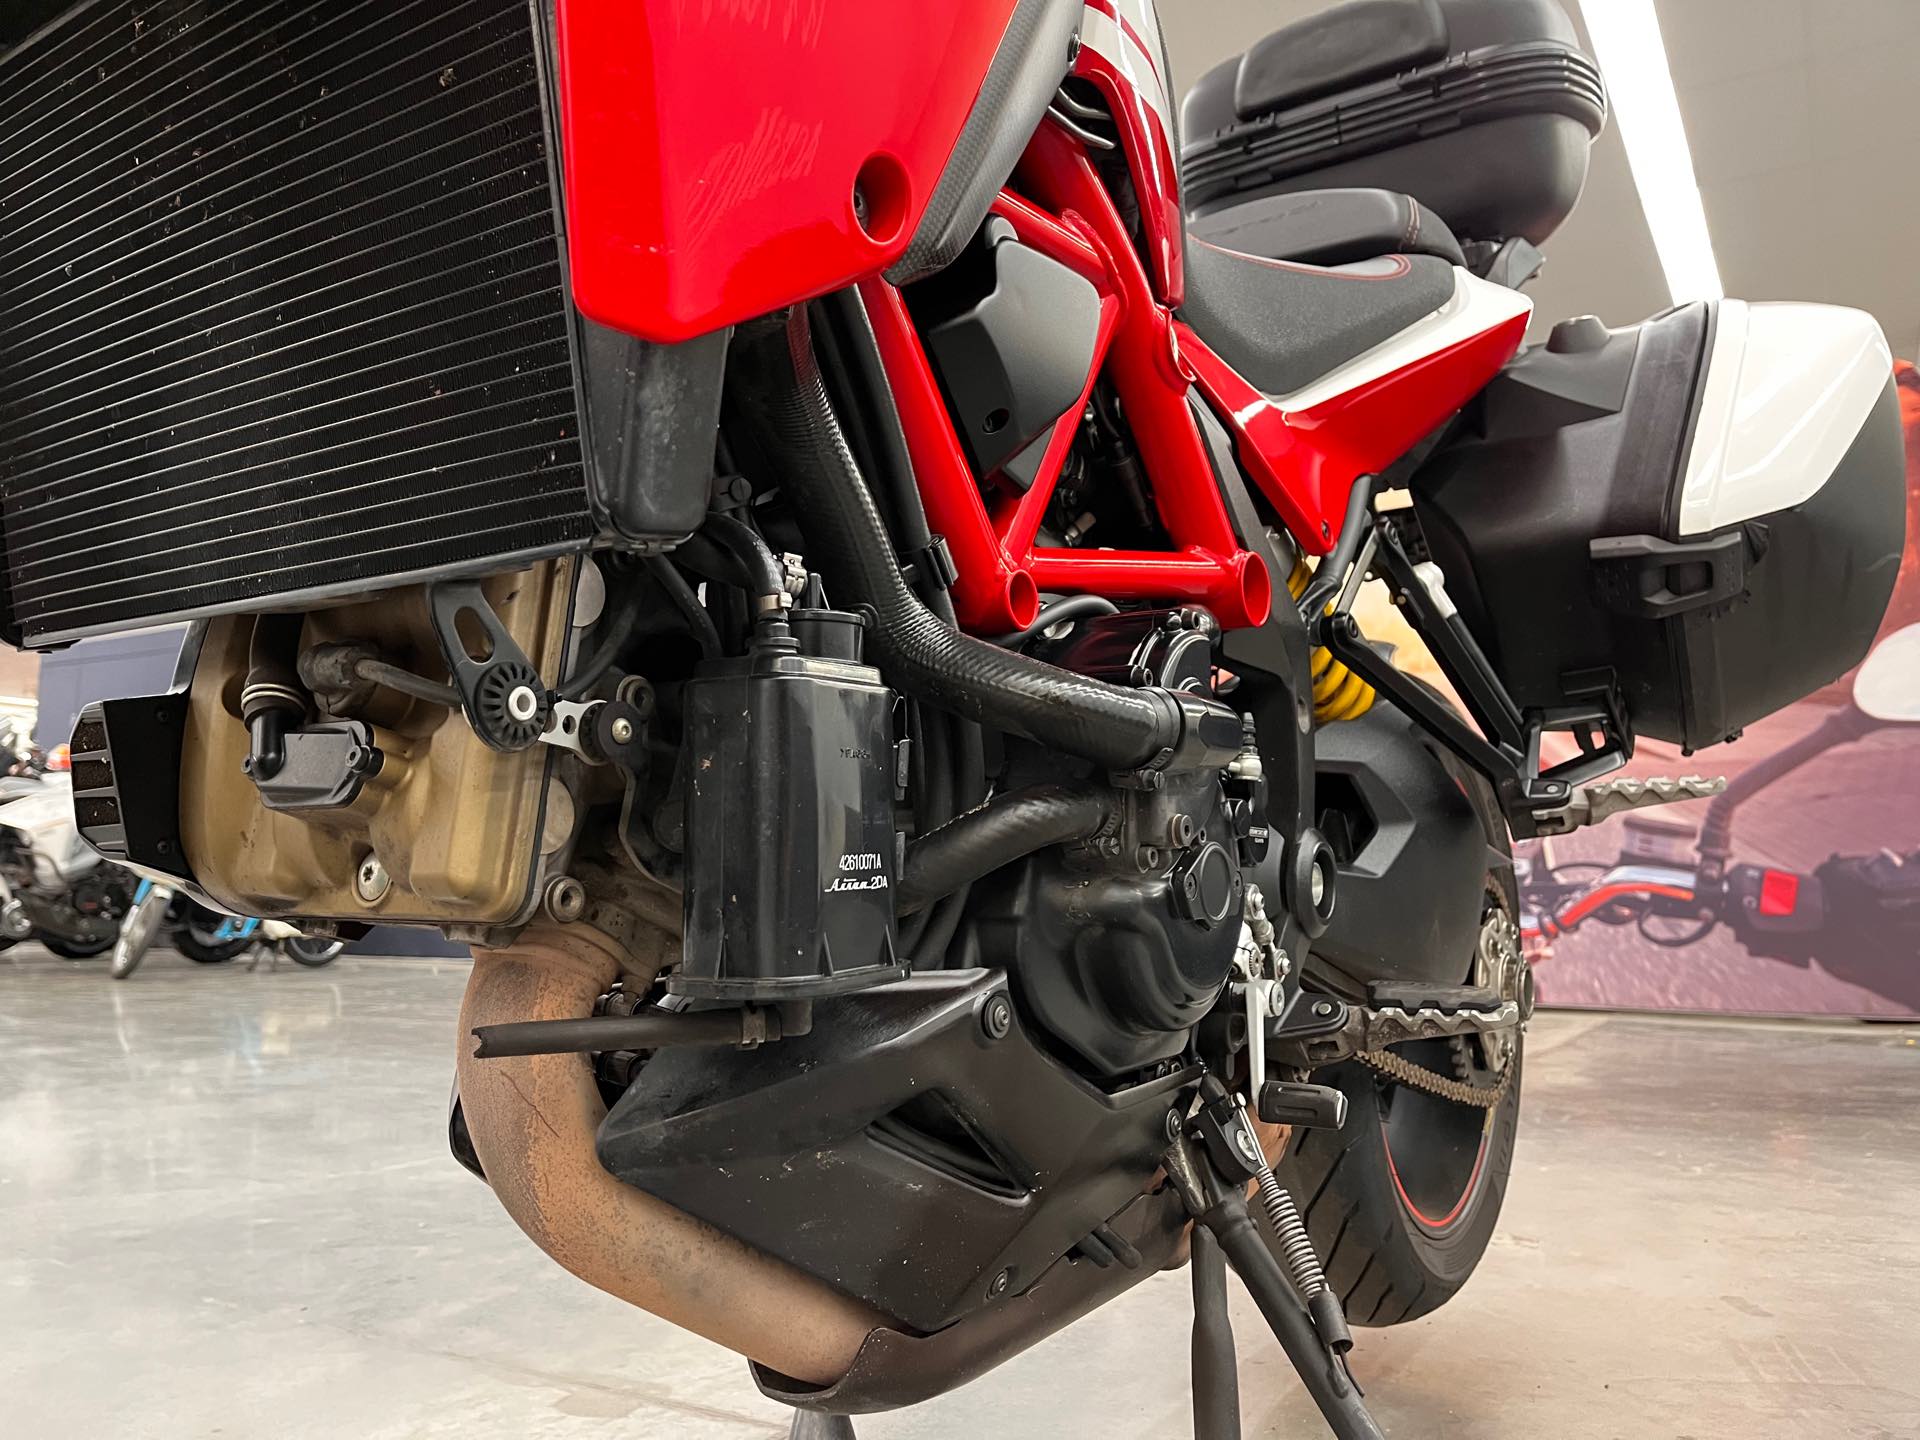 2013 Ducati Multistrada 1200 S Granturismo at Aces Motorcycles - Denver